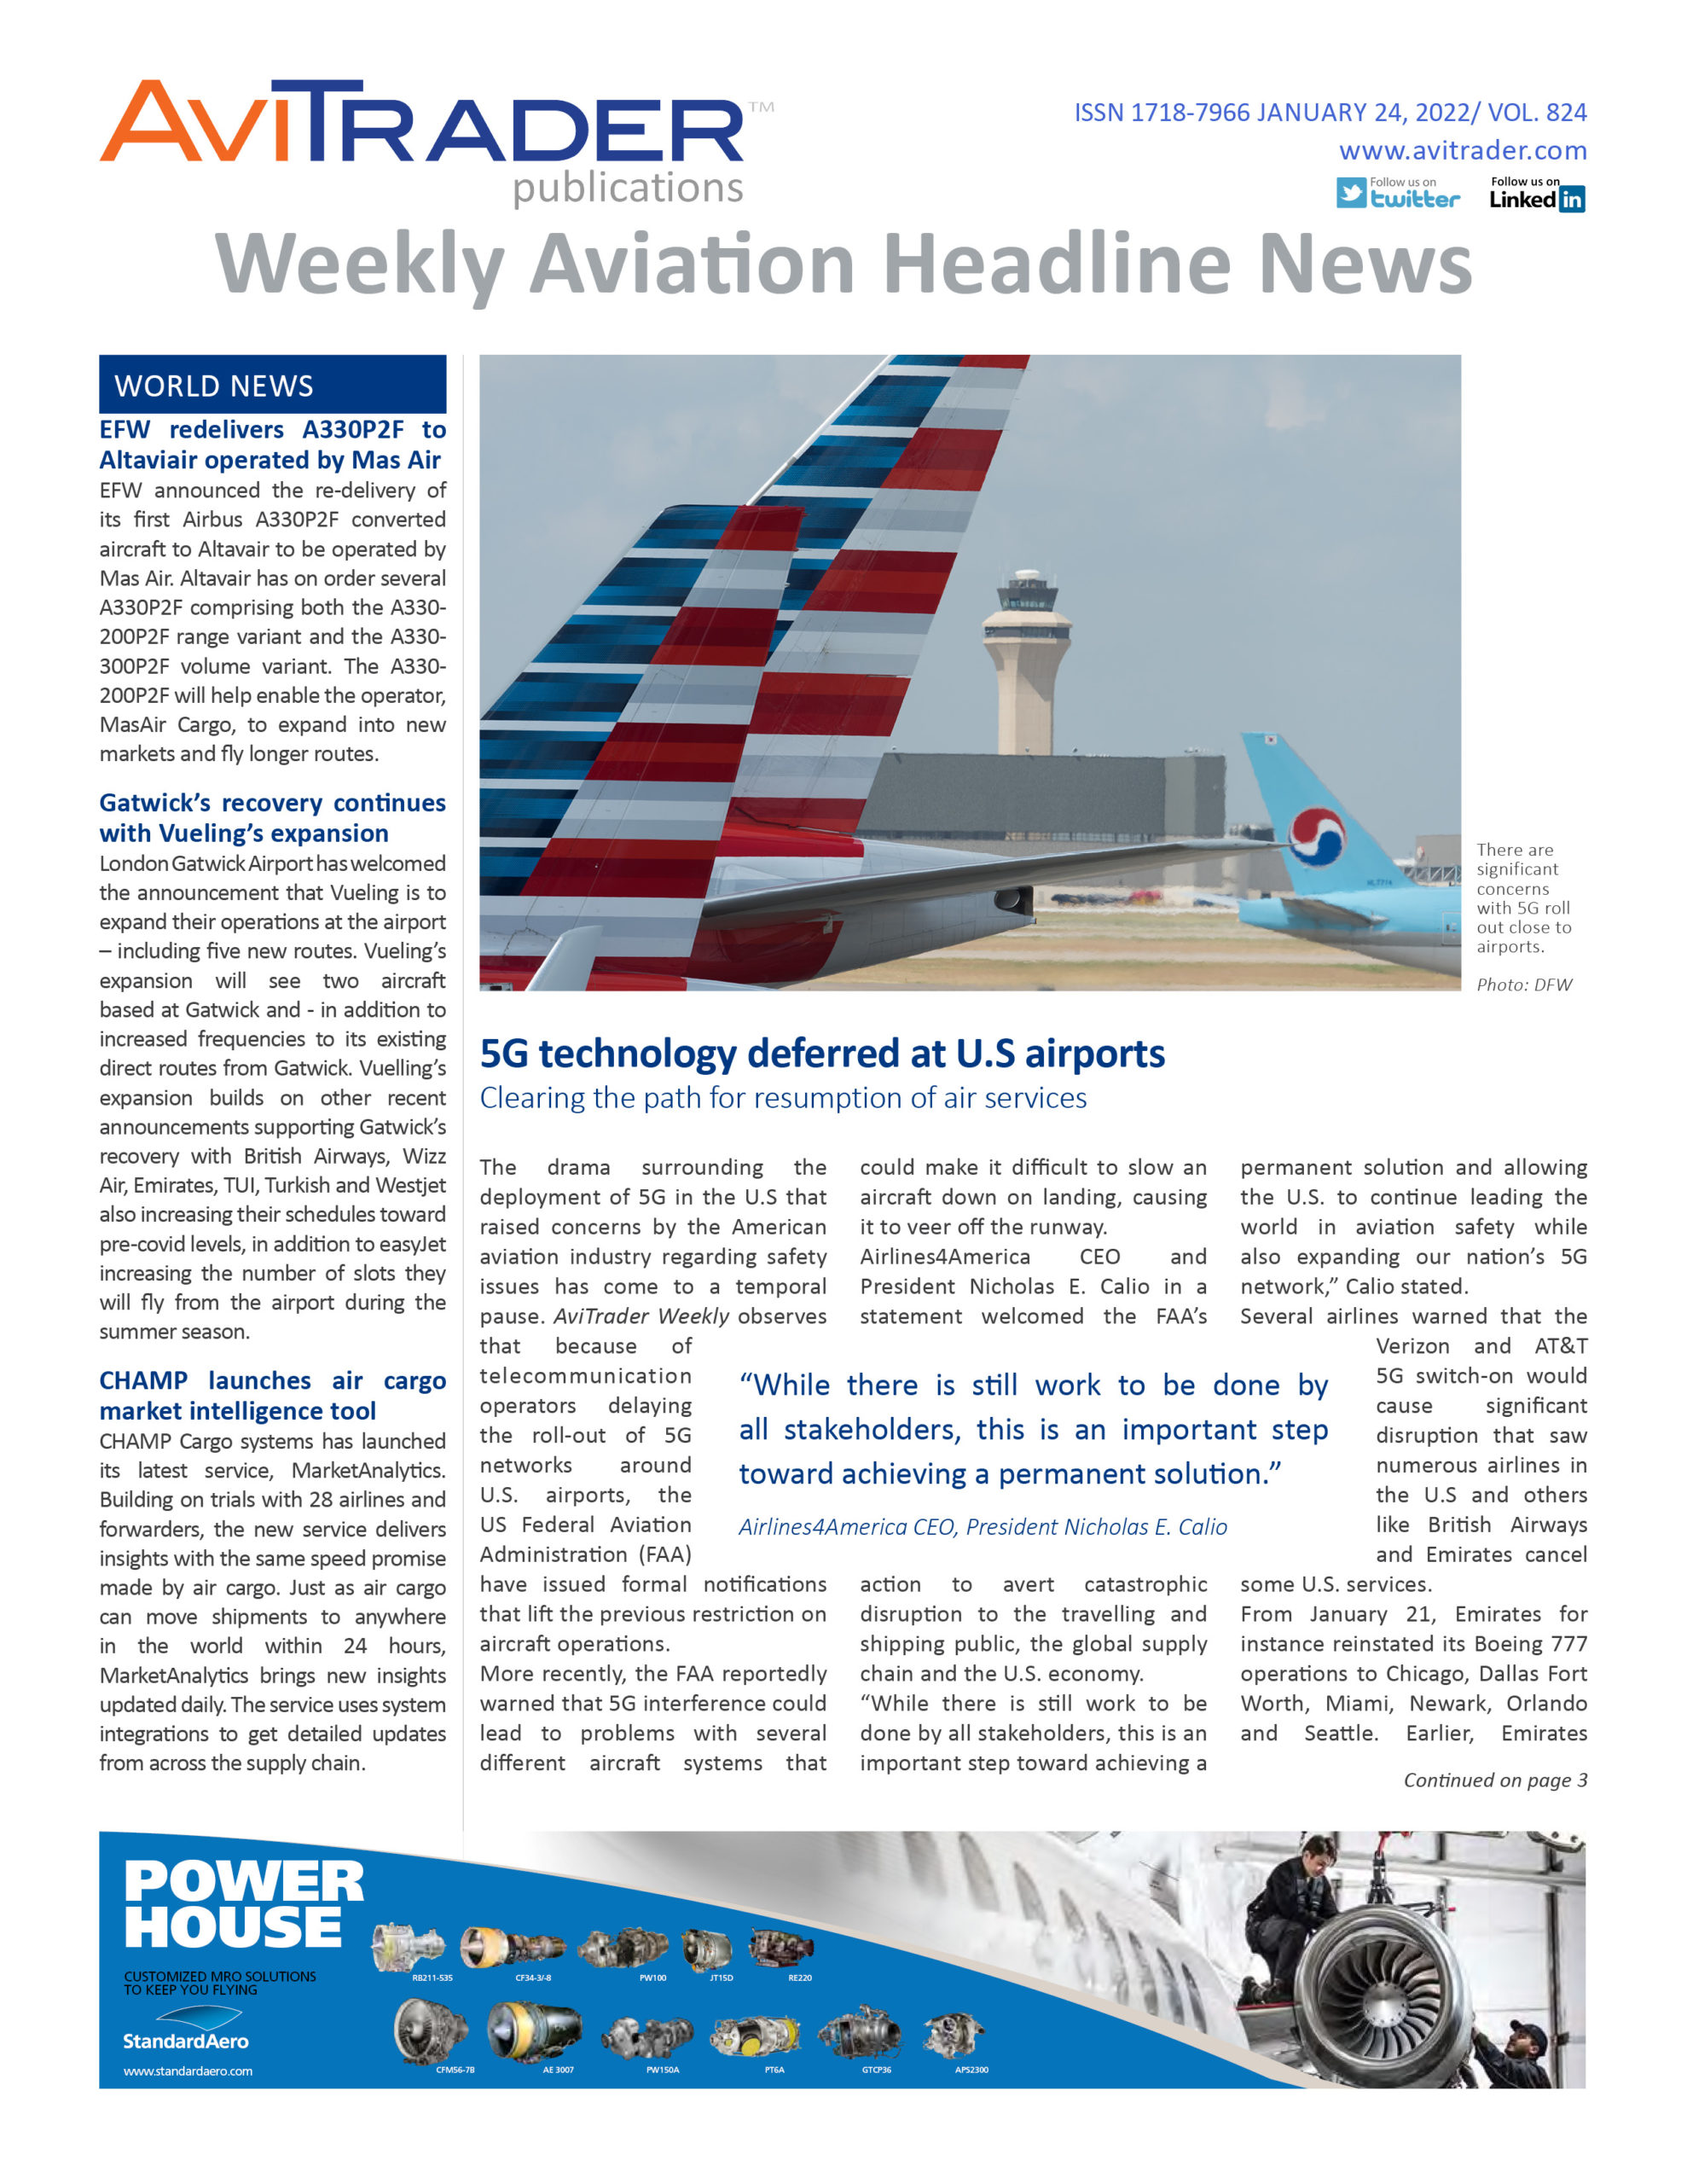 AviTrader_Weekly_Headline_News_Cover_2022-01-24